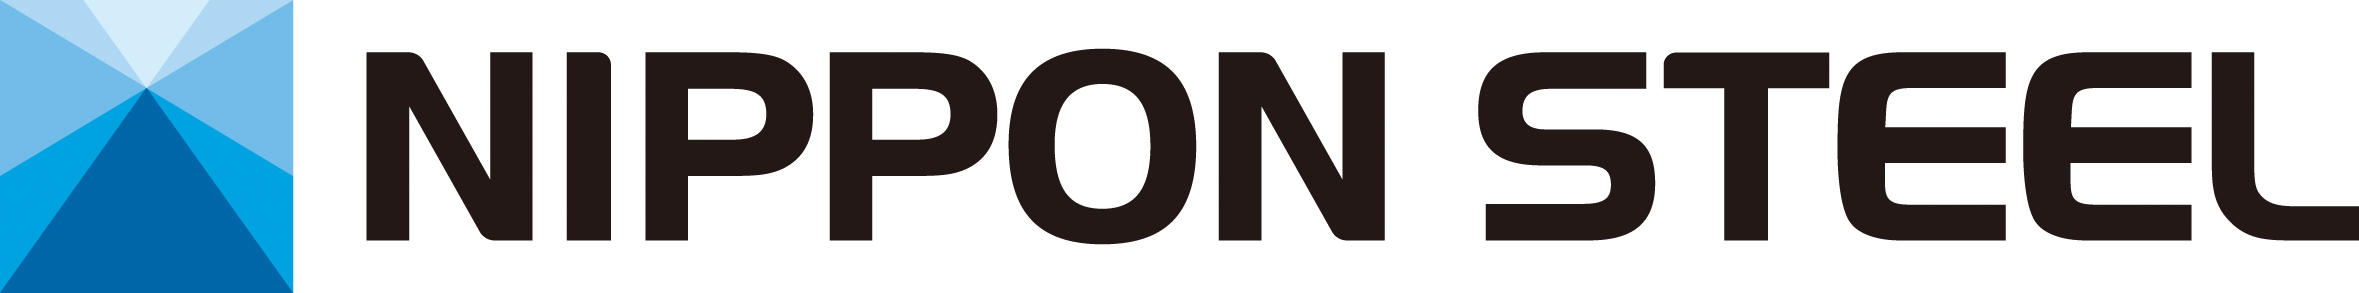 Nippon Steel Brand Logo